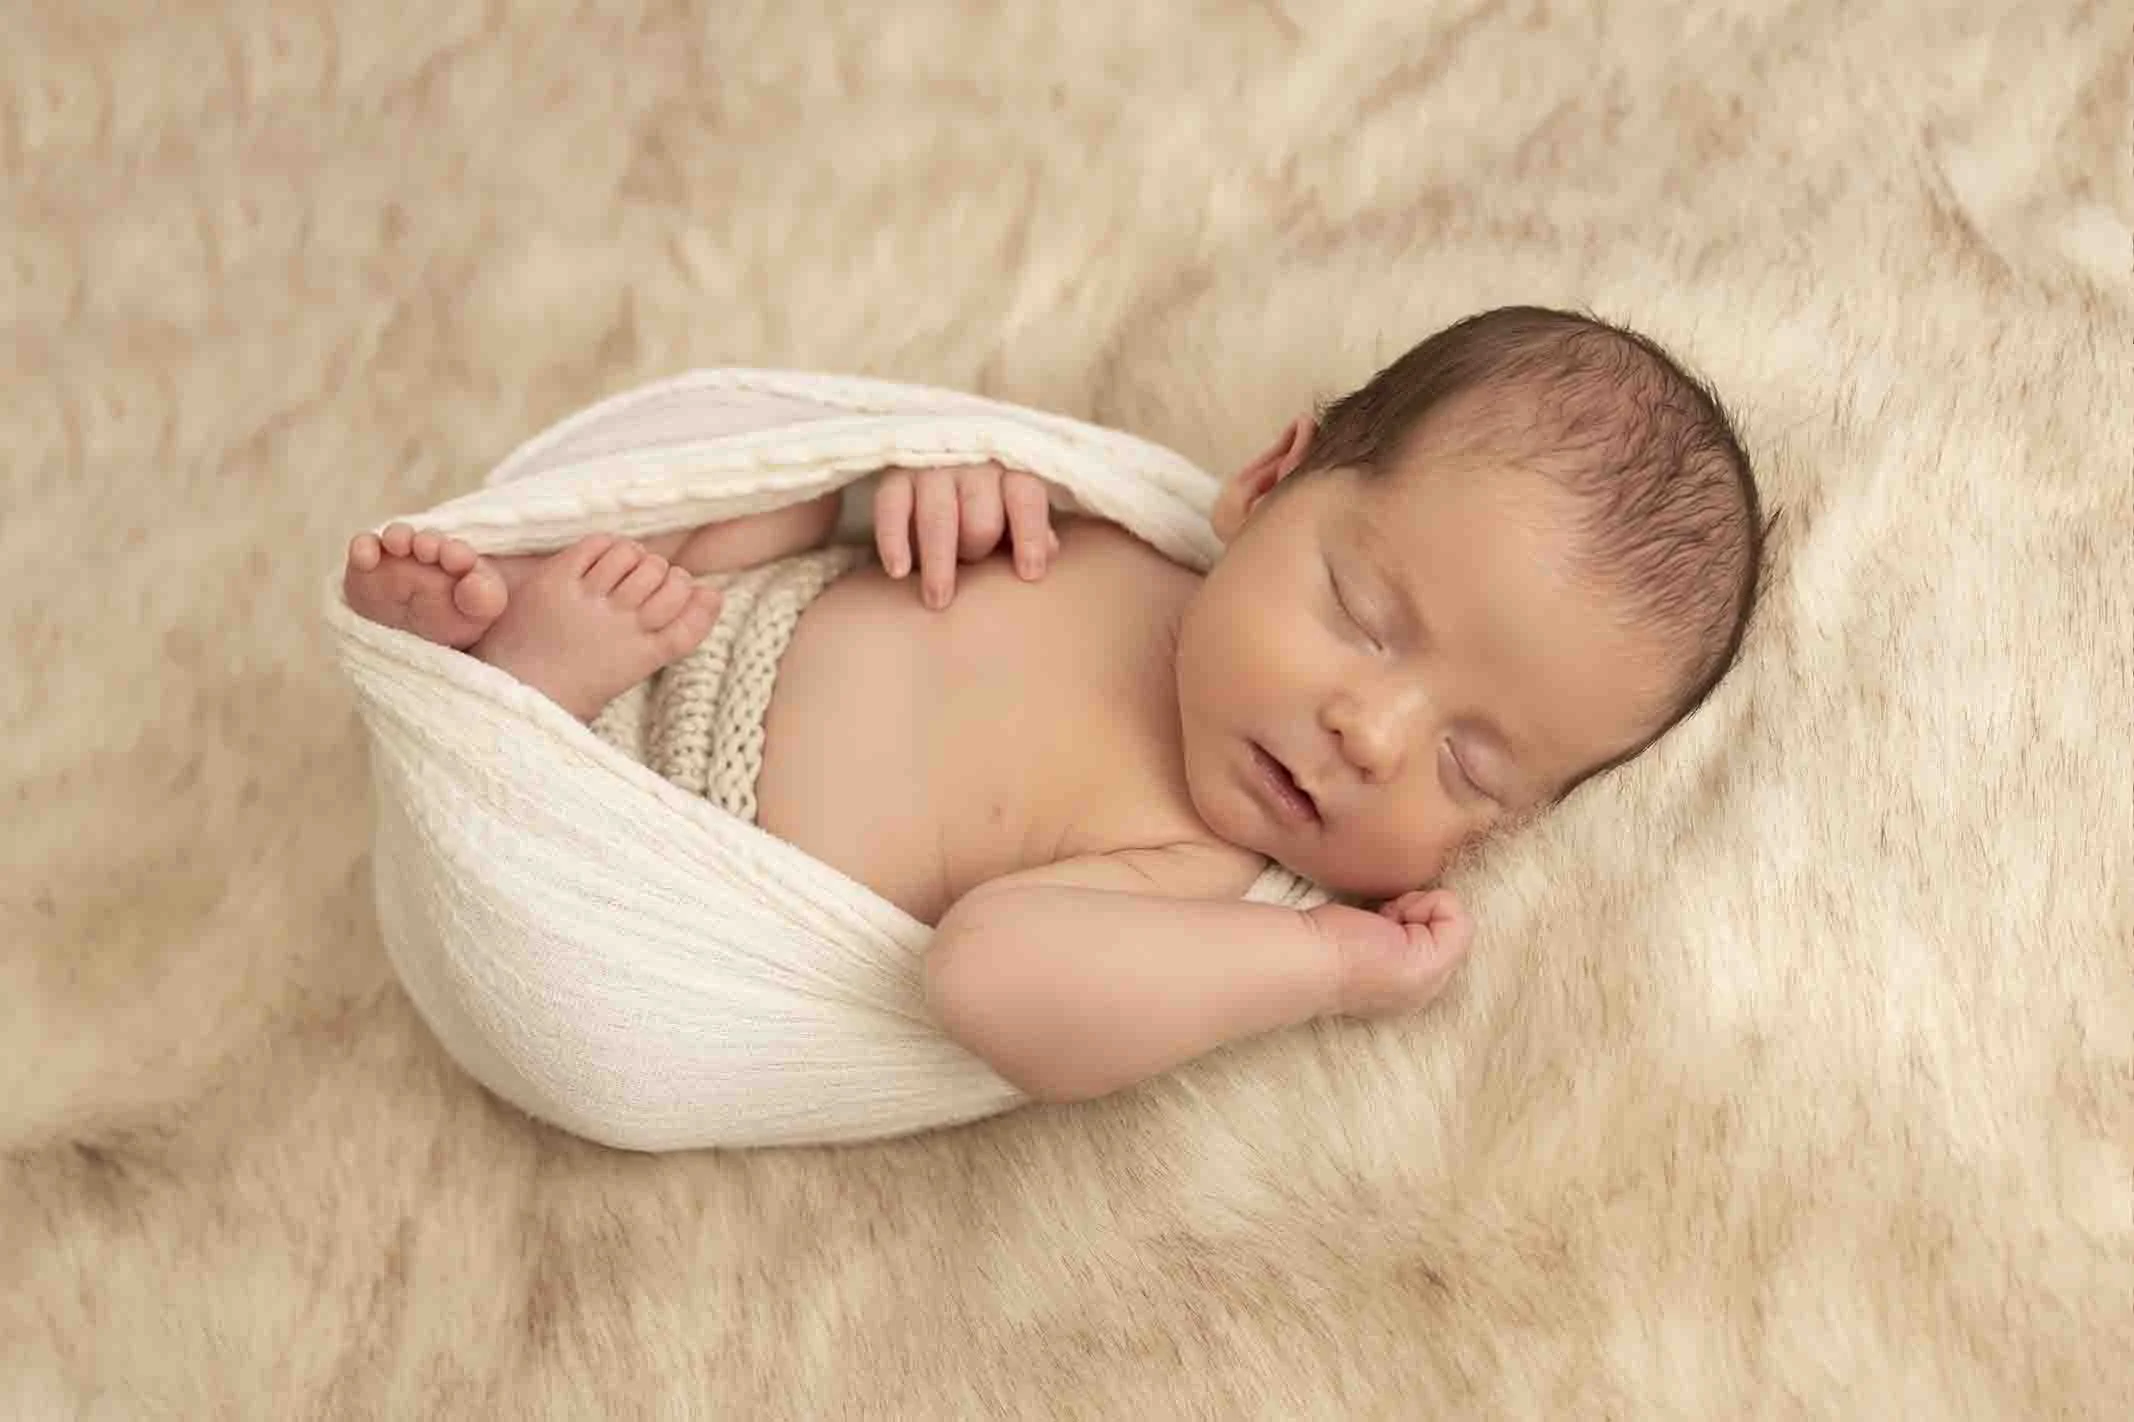 Newborn photographer taking photos on baby in white furr